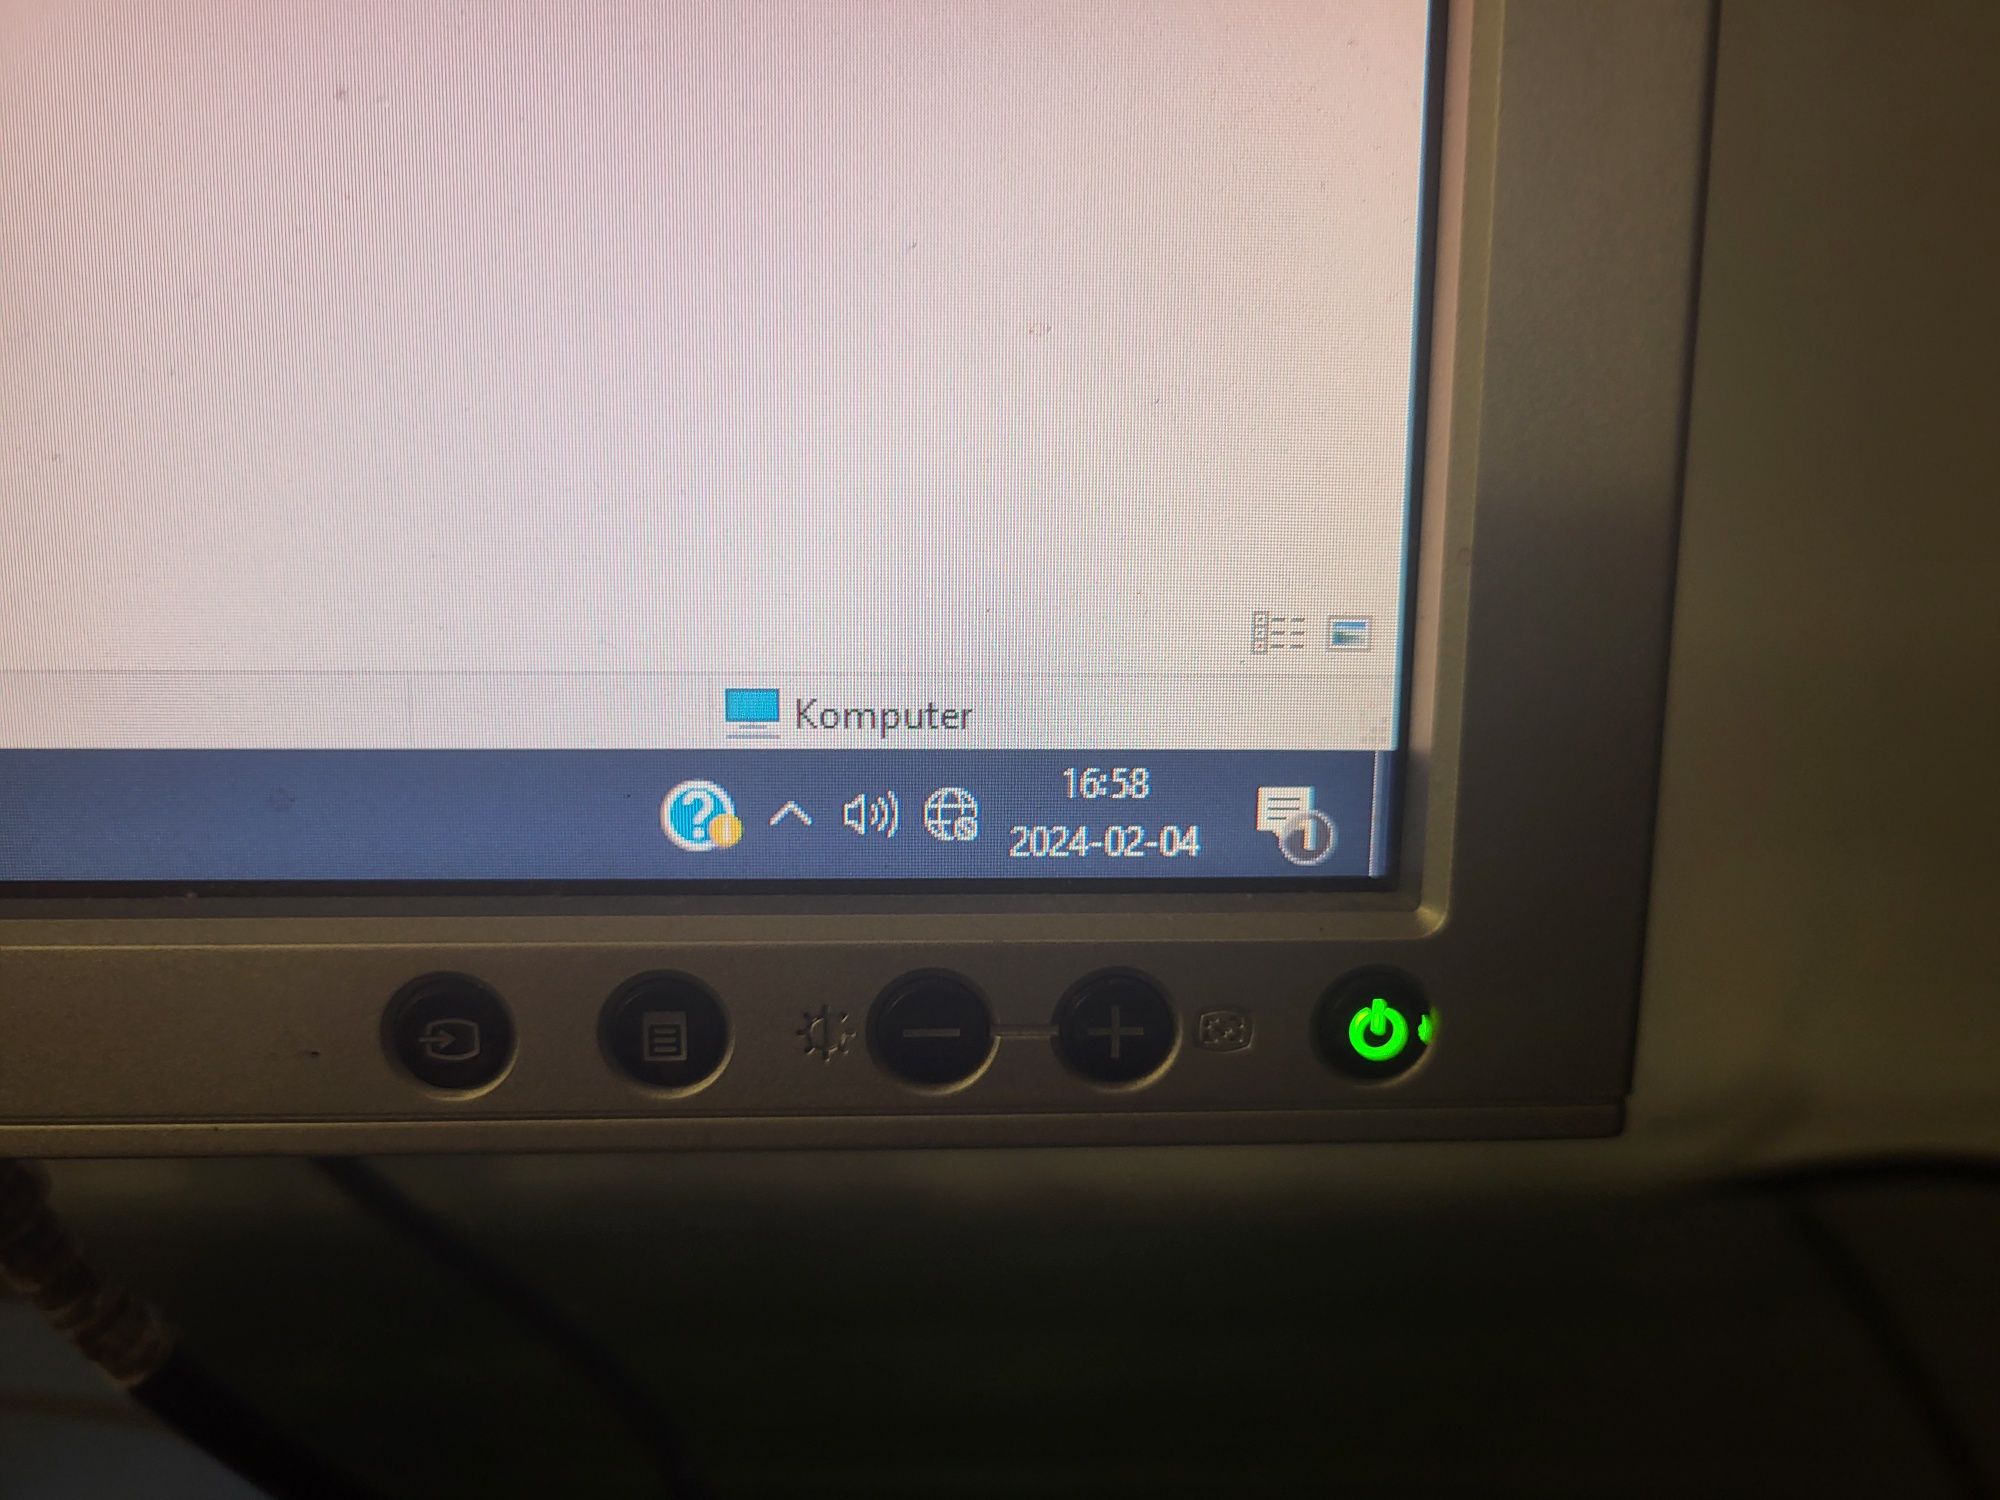 Zestaw HP ElliteDesk komputer monitor klawiatura mysz TANIO